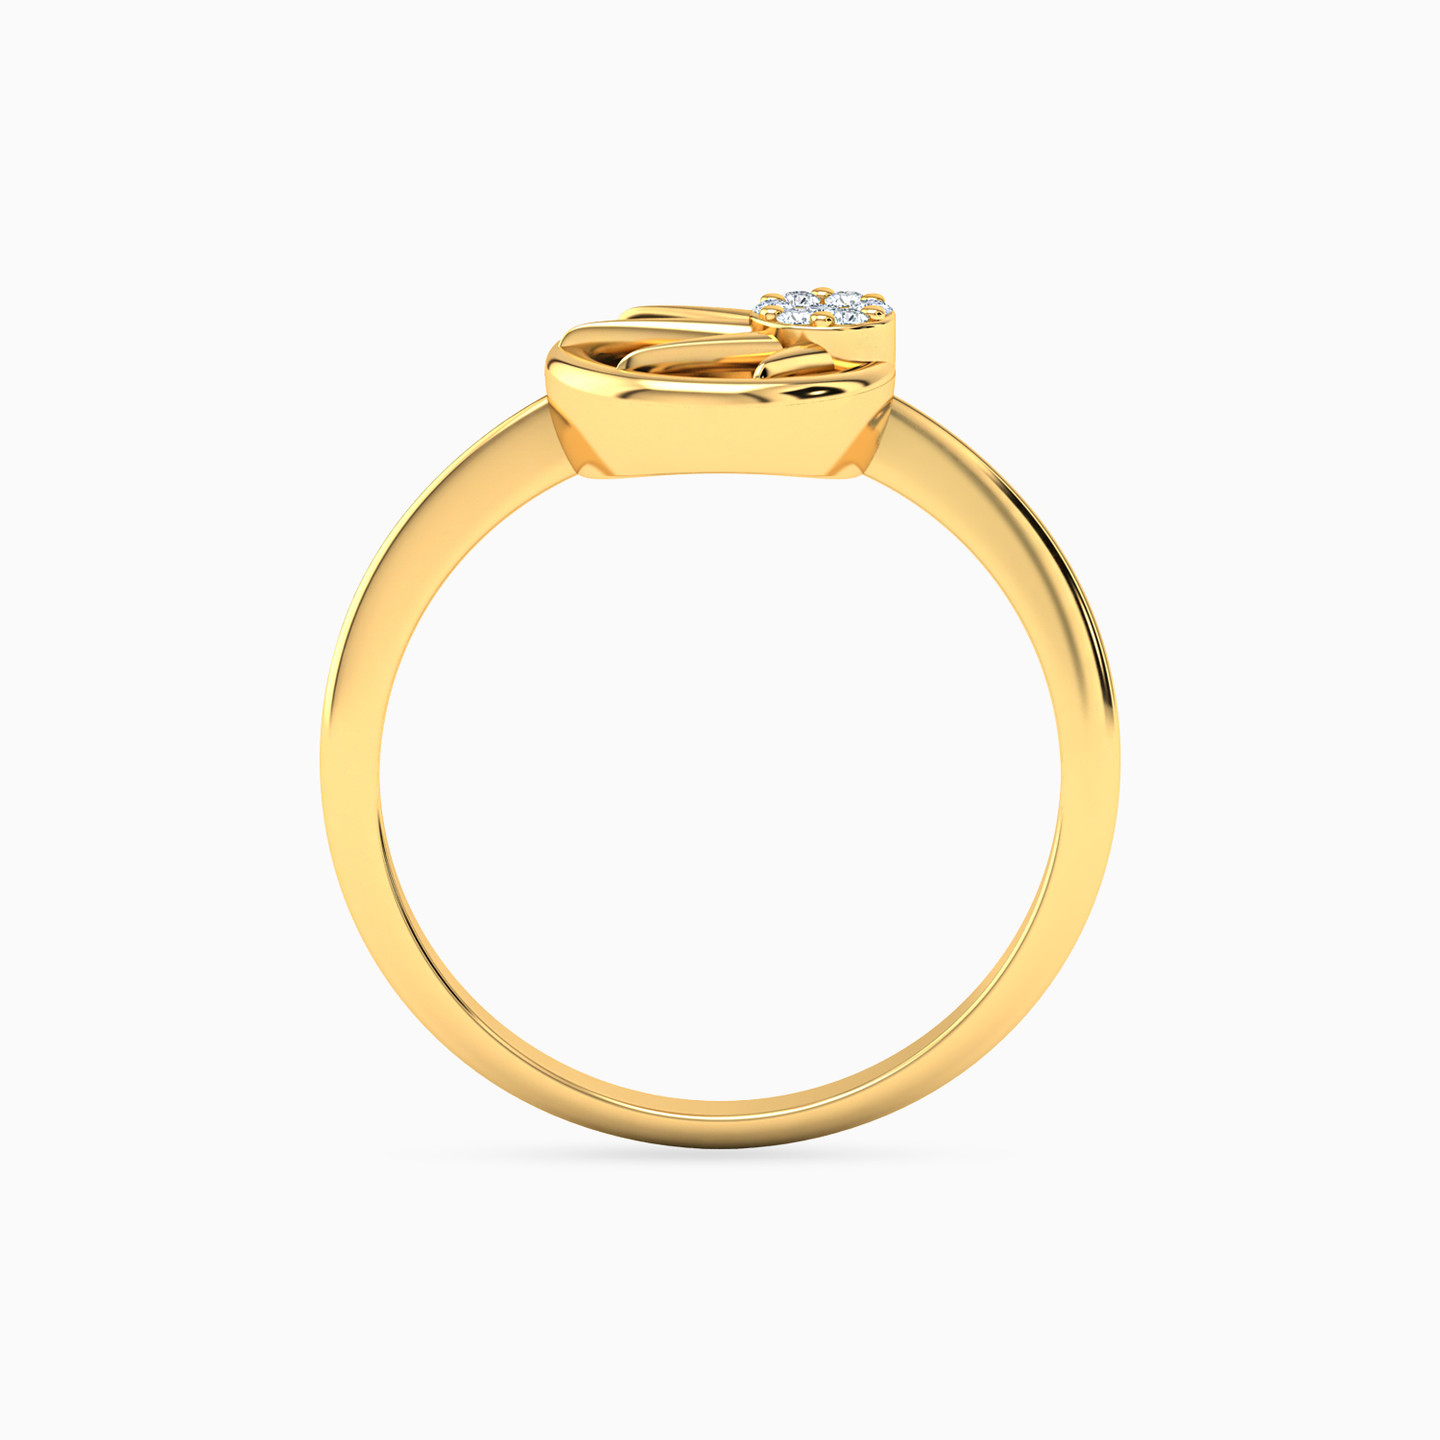 Round Shaped Diamond Statement Ring in 18K Gold - 3